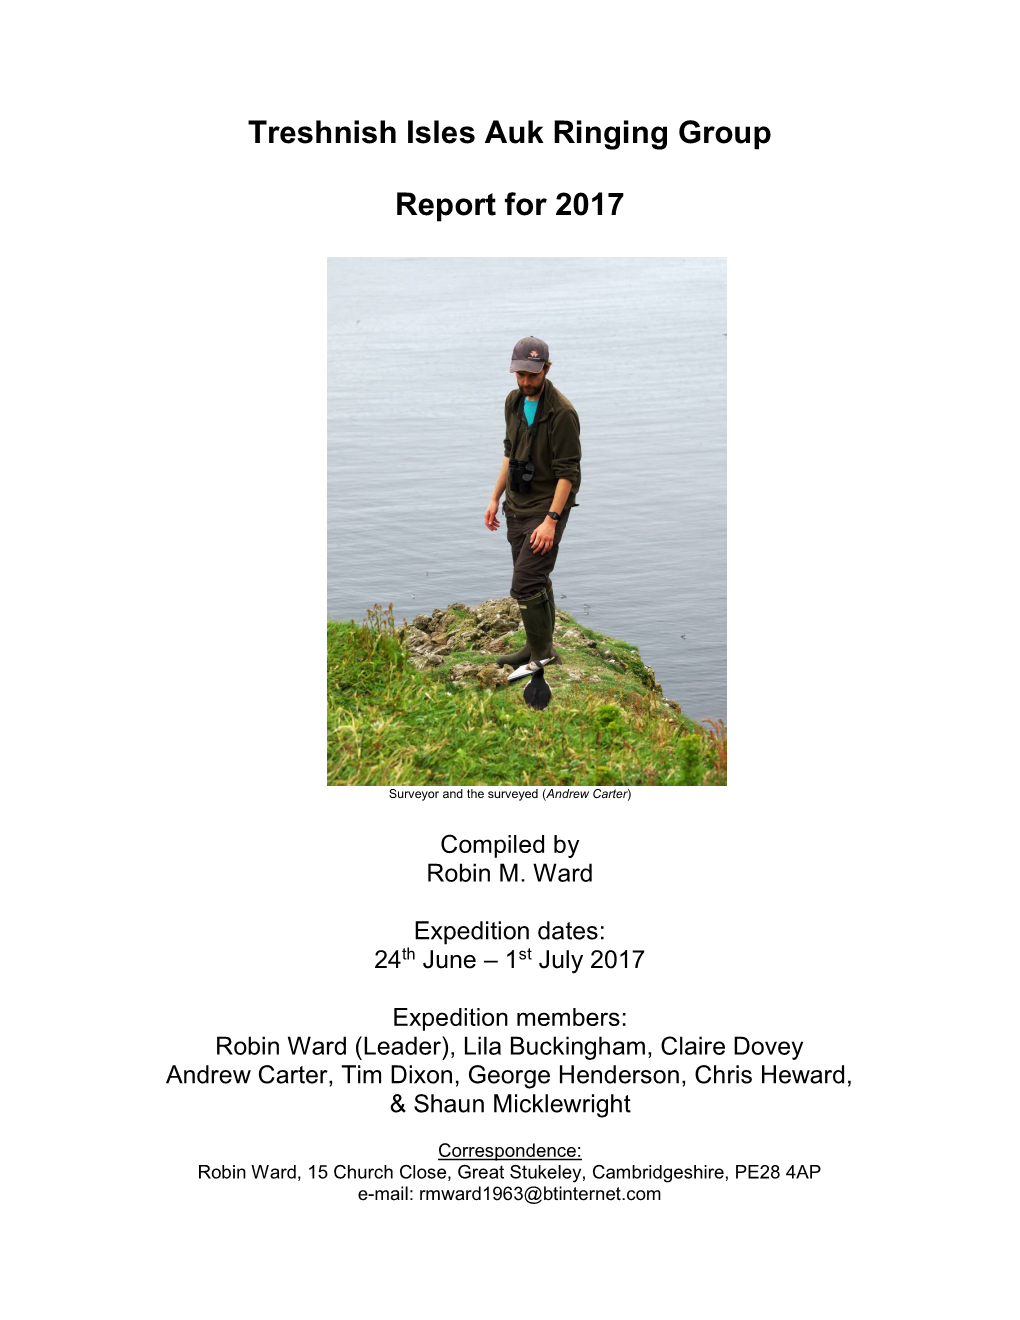 Treshnish Isles Auk Ringing Group Report for 2017